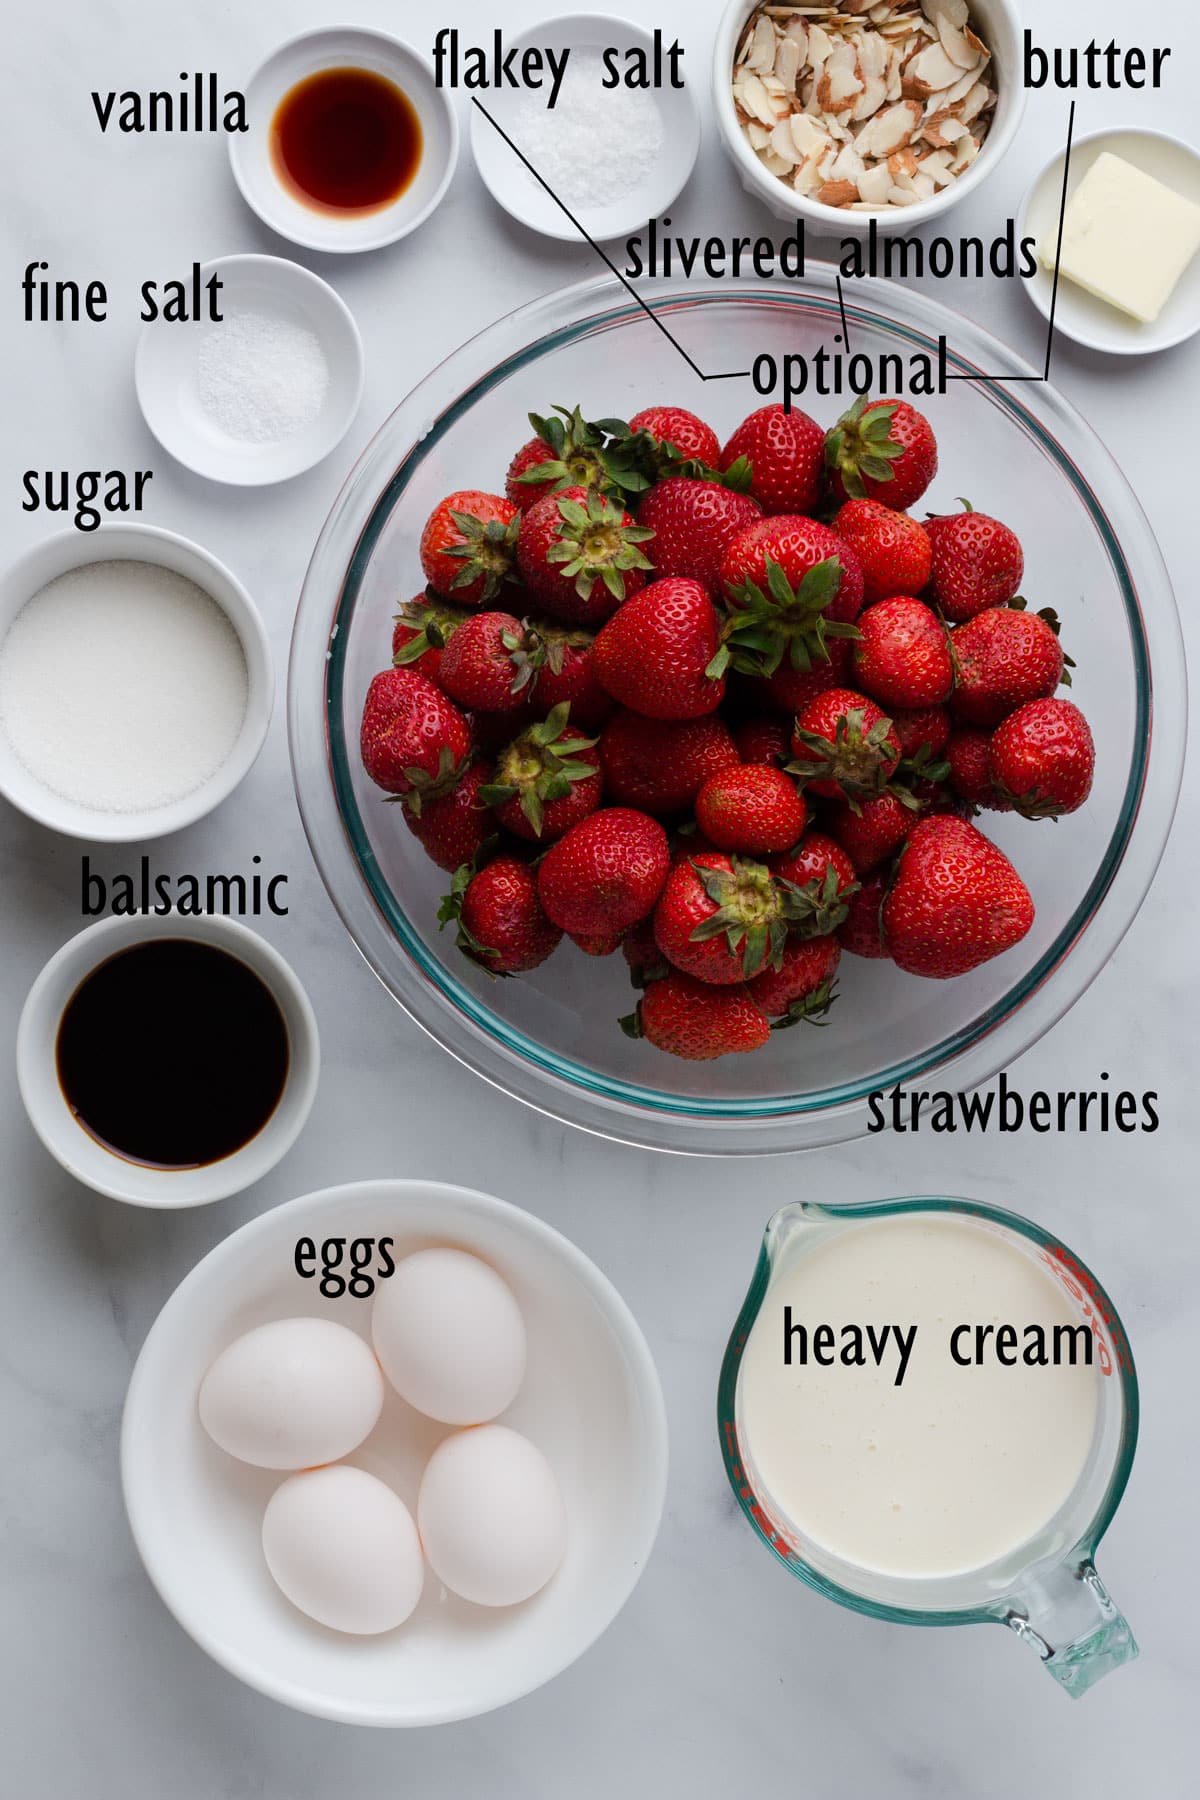 Ice cream ingredients, including strawberries, balsamic vinegar, eggs, cream and sugar.